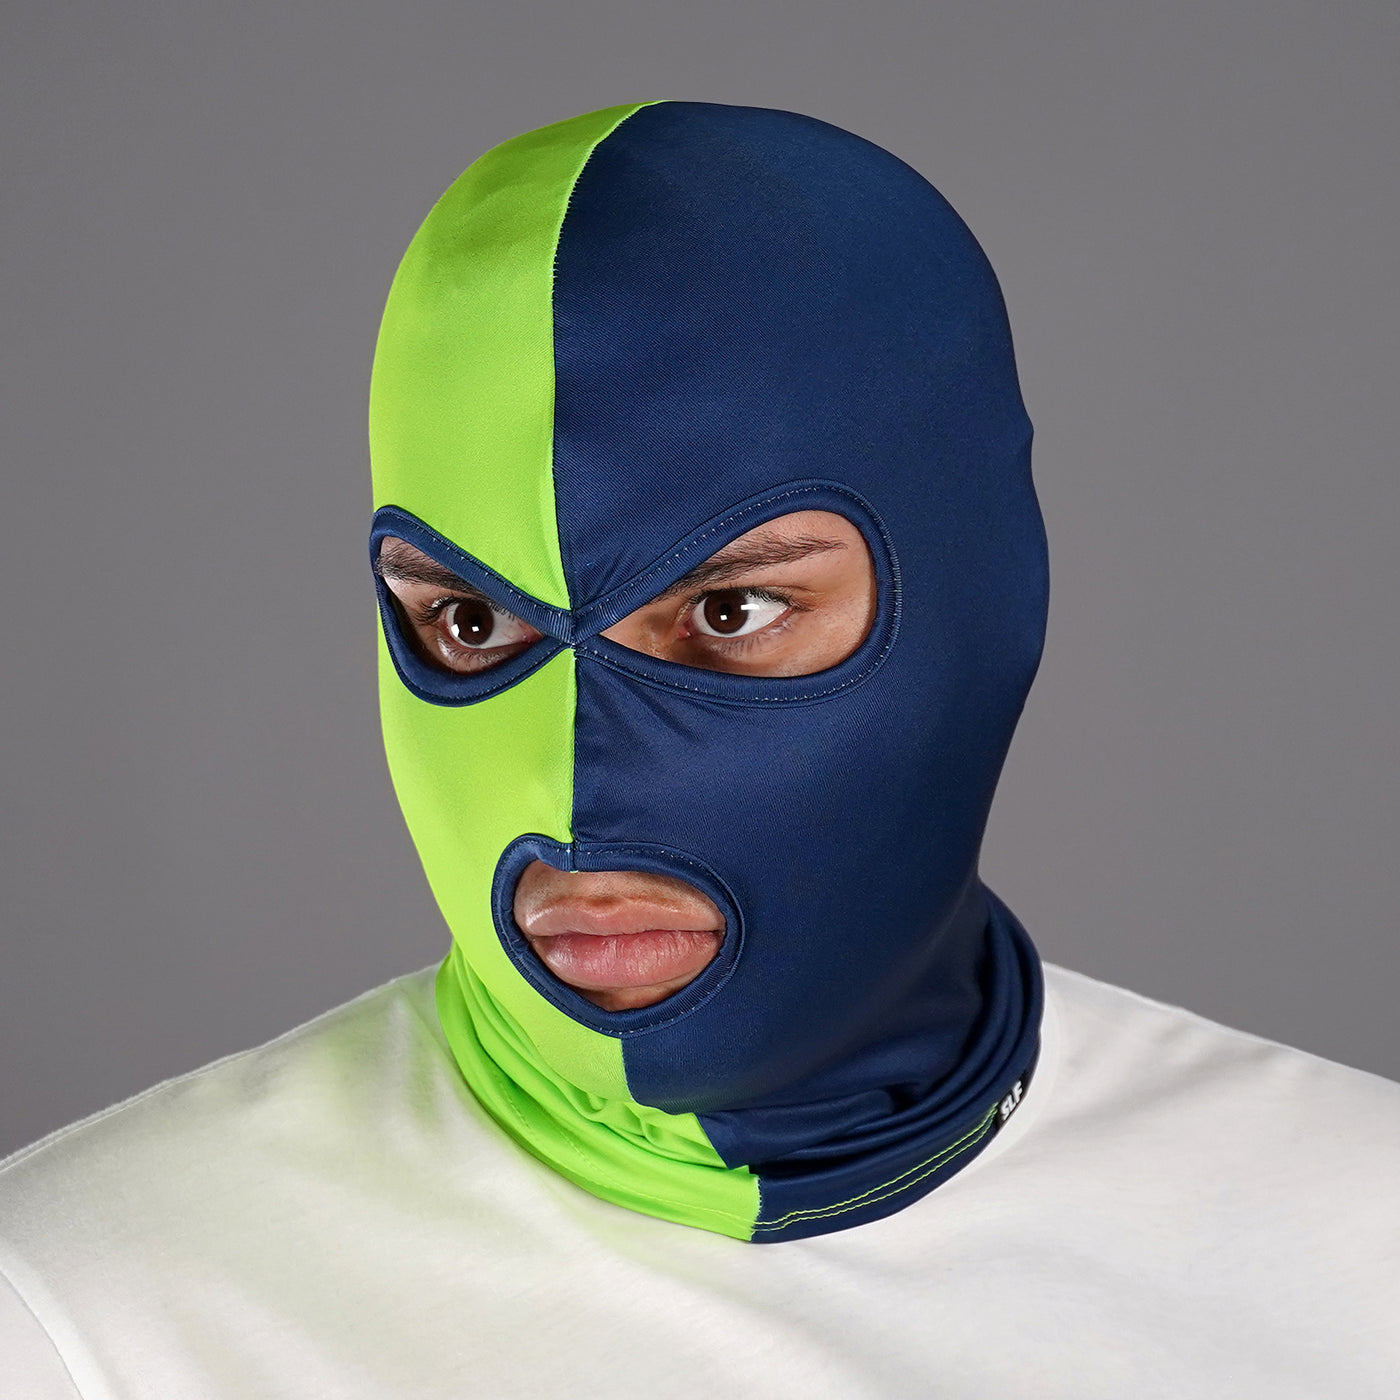 Hot Green Navy Blue 3 Hole Ski Mask